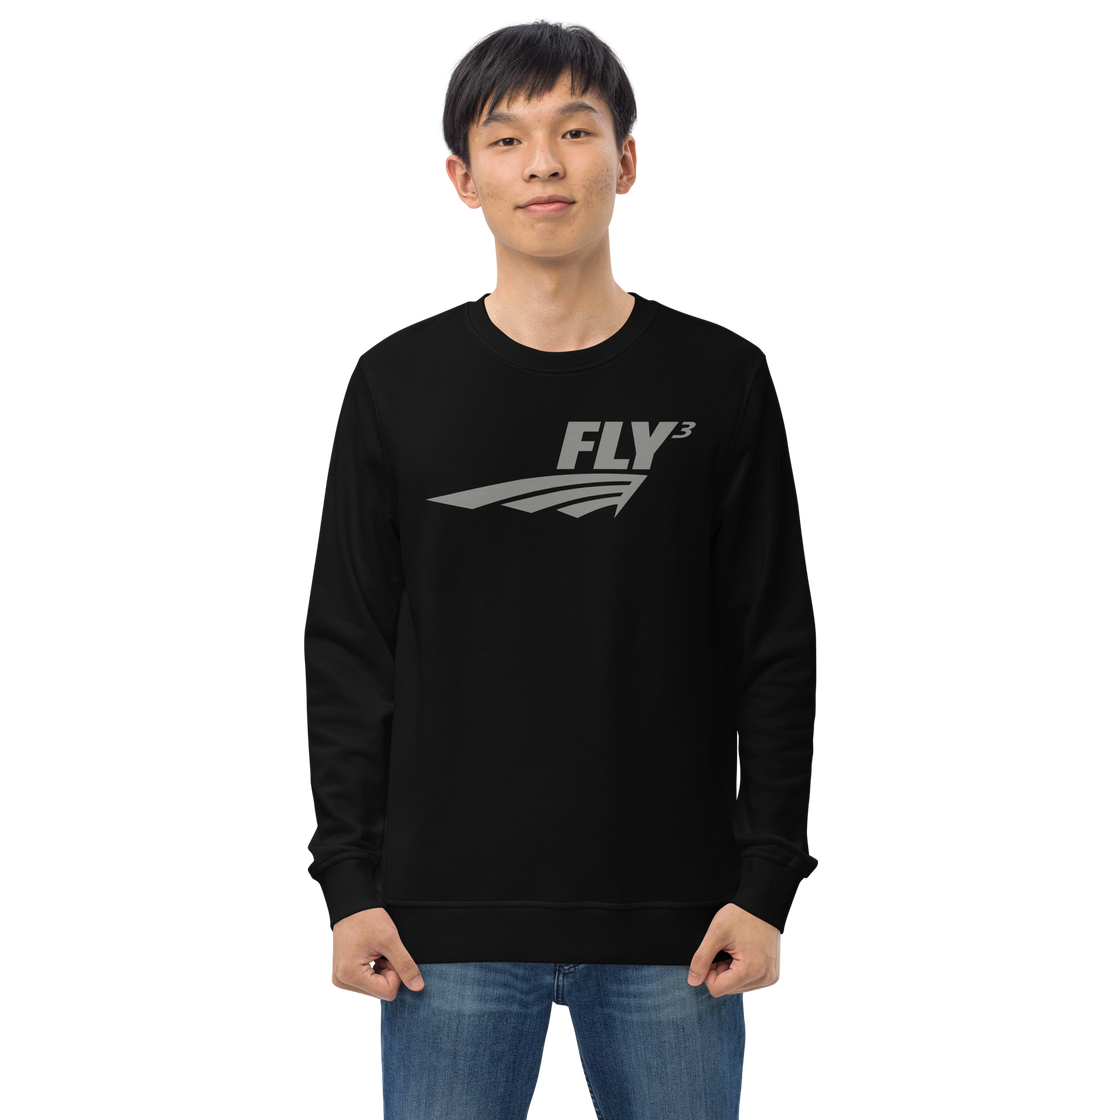 FLY³ organic sweatshirt | Flycube